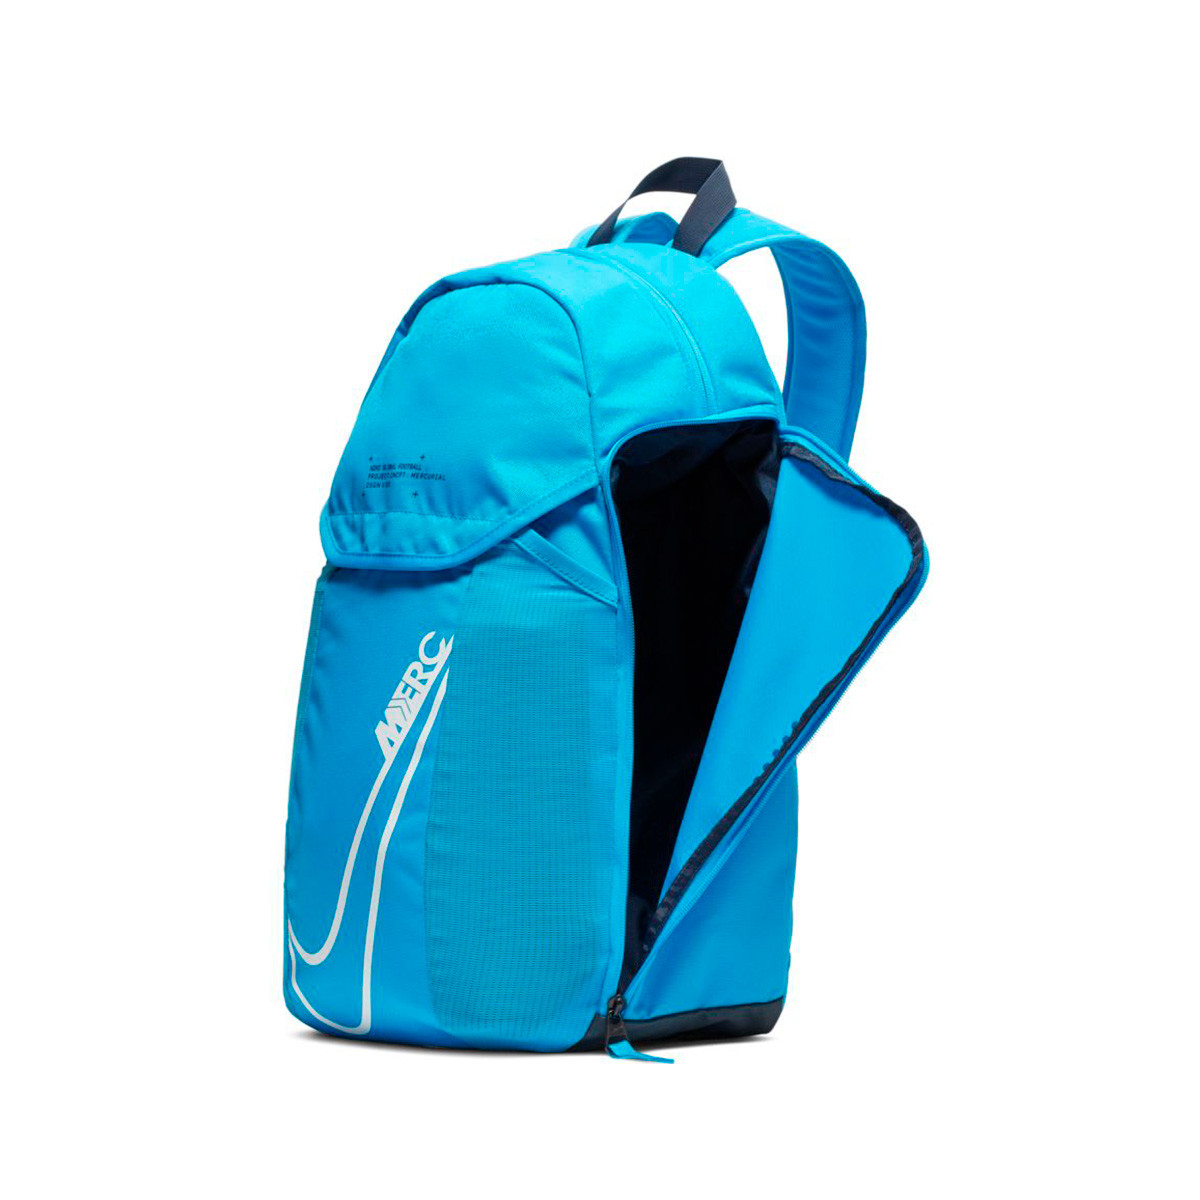 turquoise nike backpack